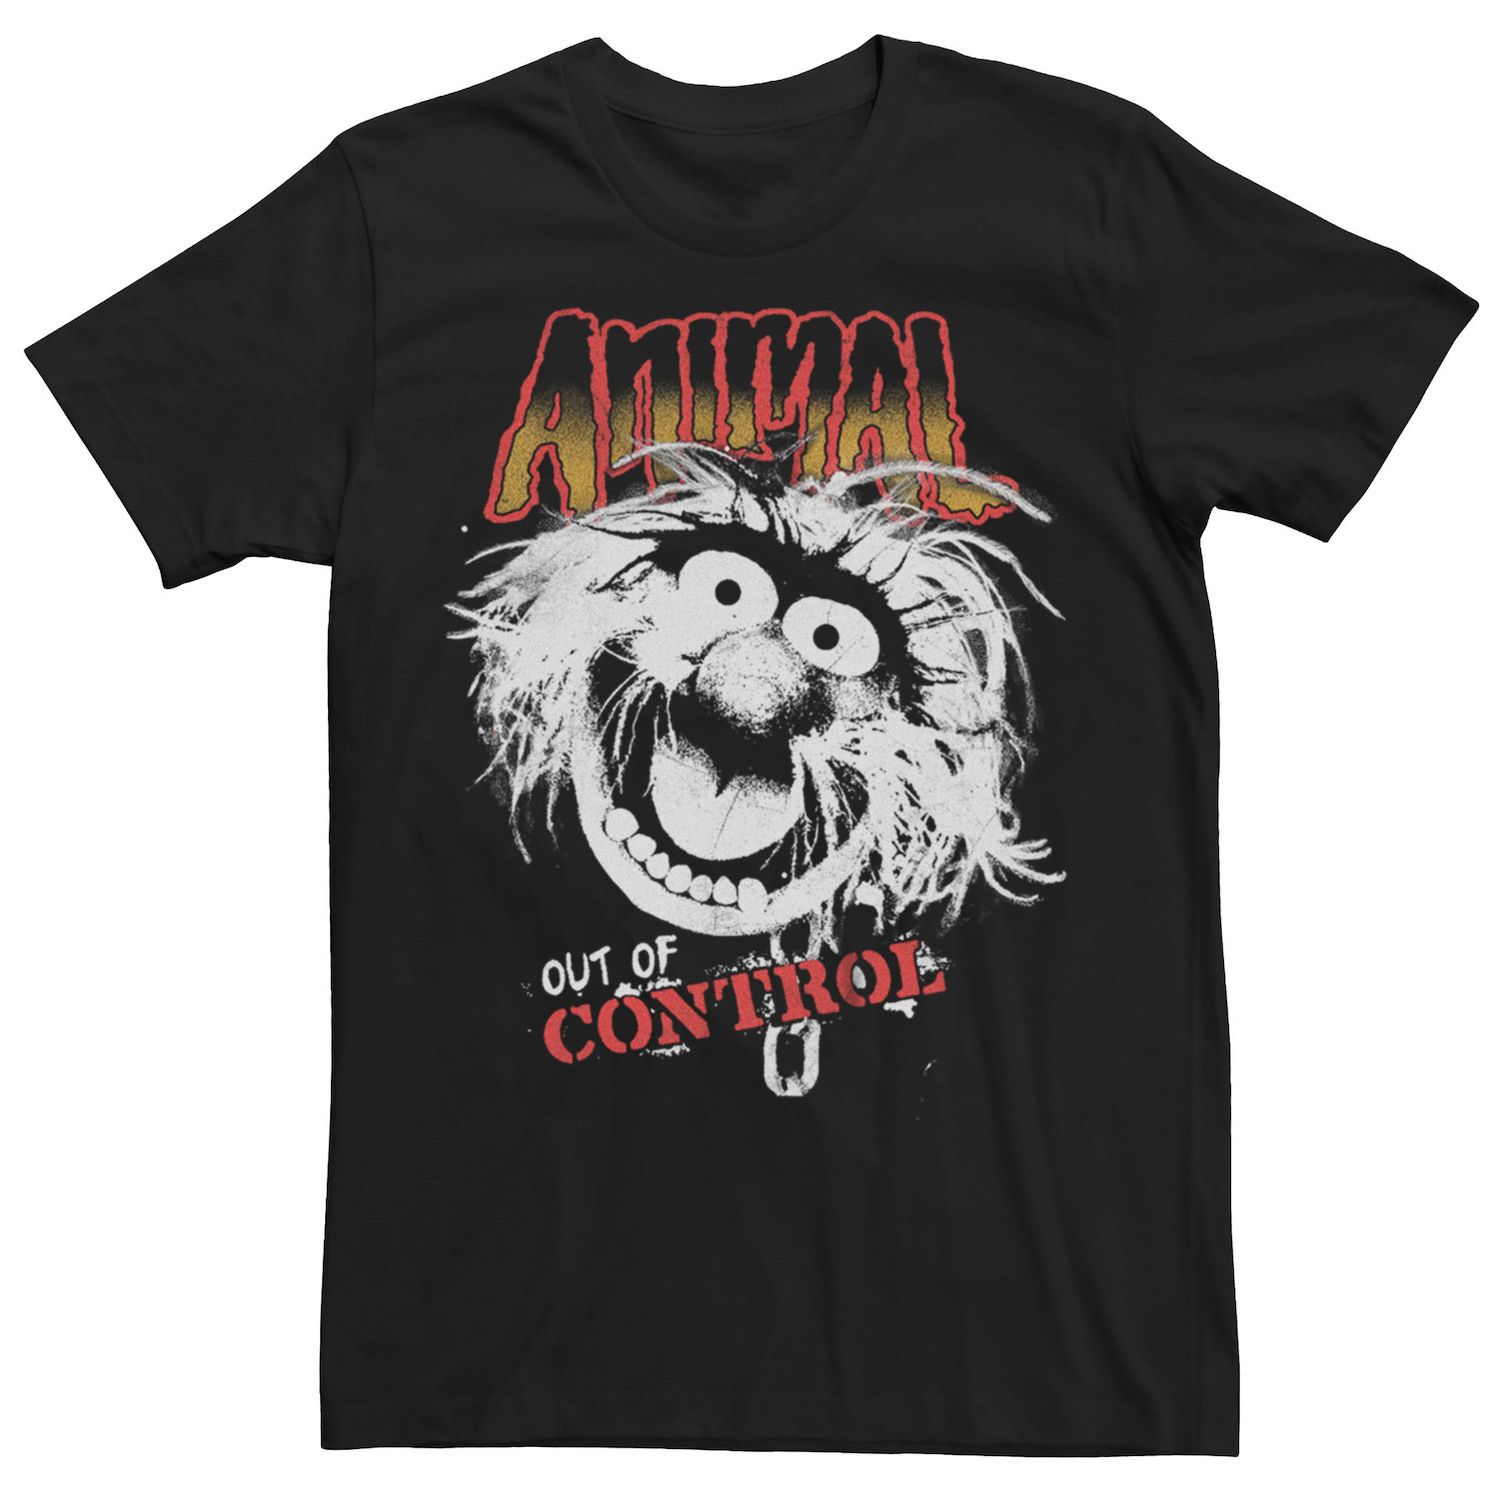 цена Мужская футболка с графическим плакатом и плакатом Disney's The Muppets Animal